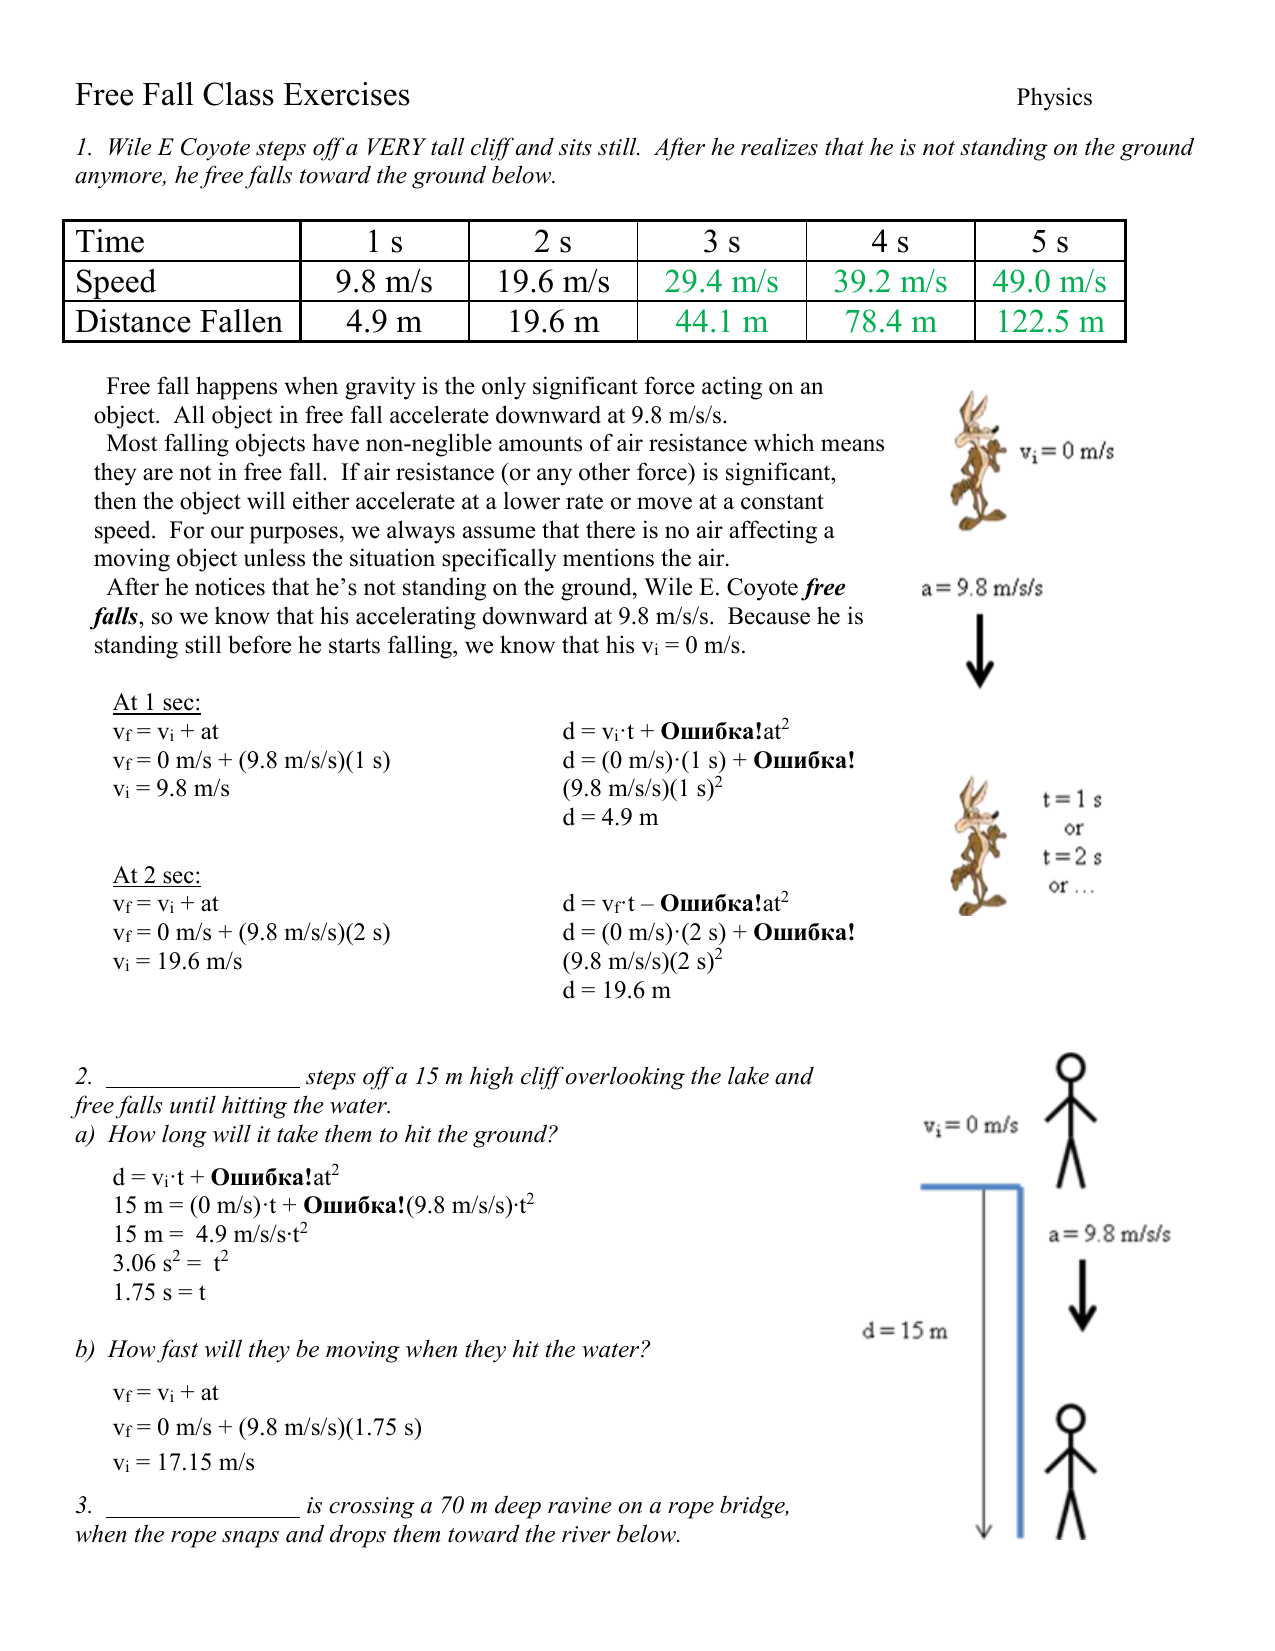 free-fall-worksheet-physics